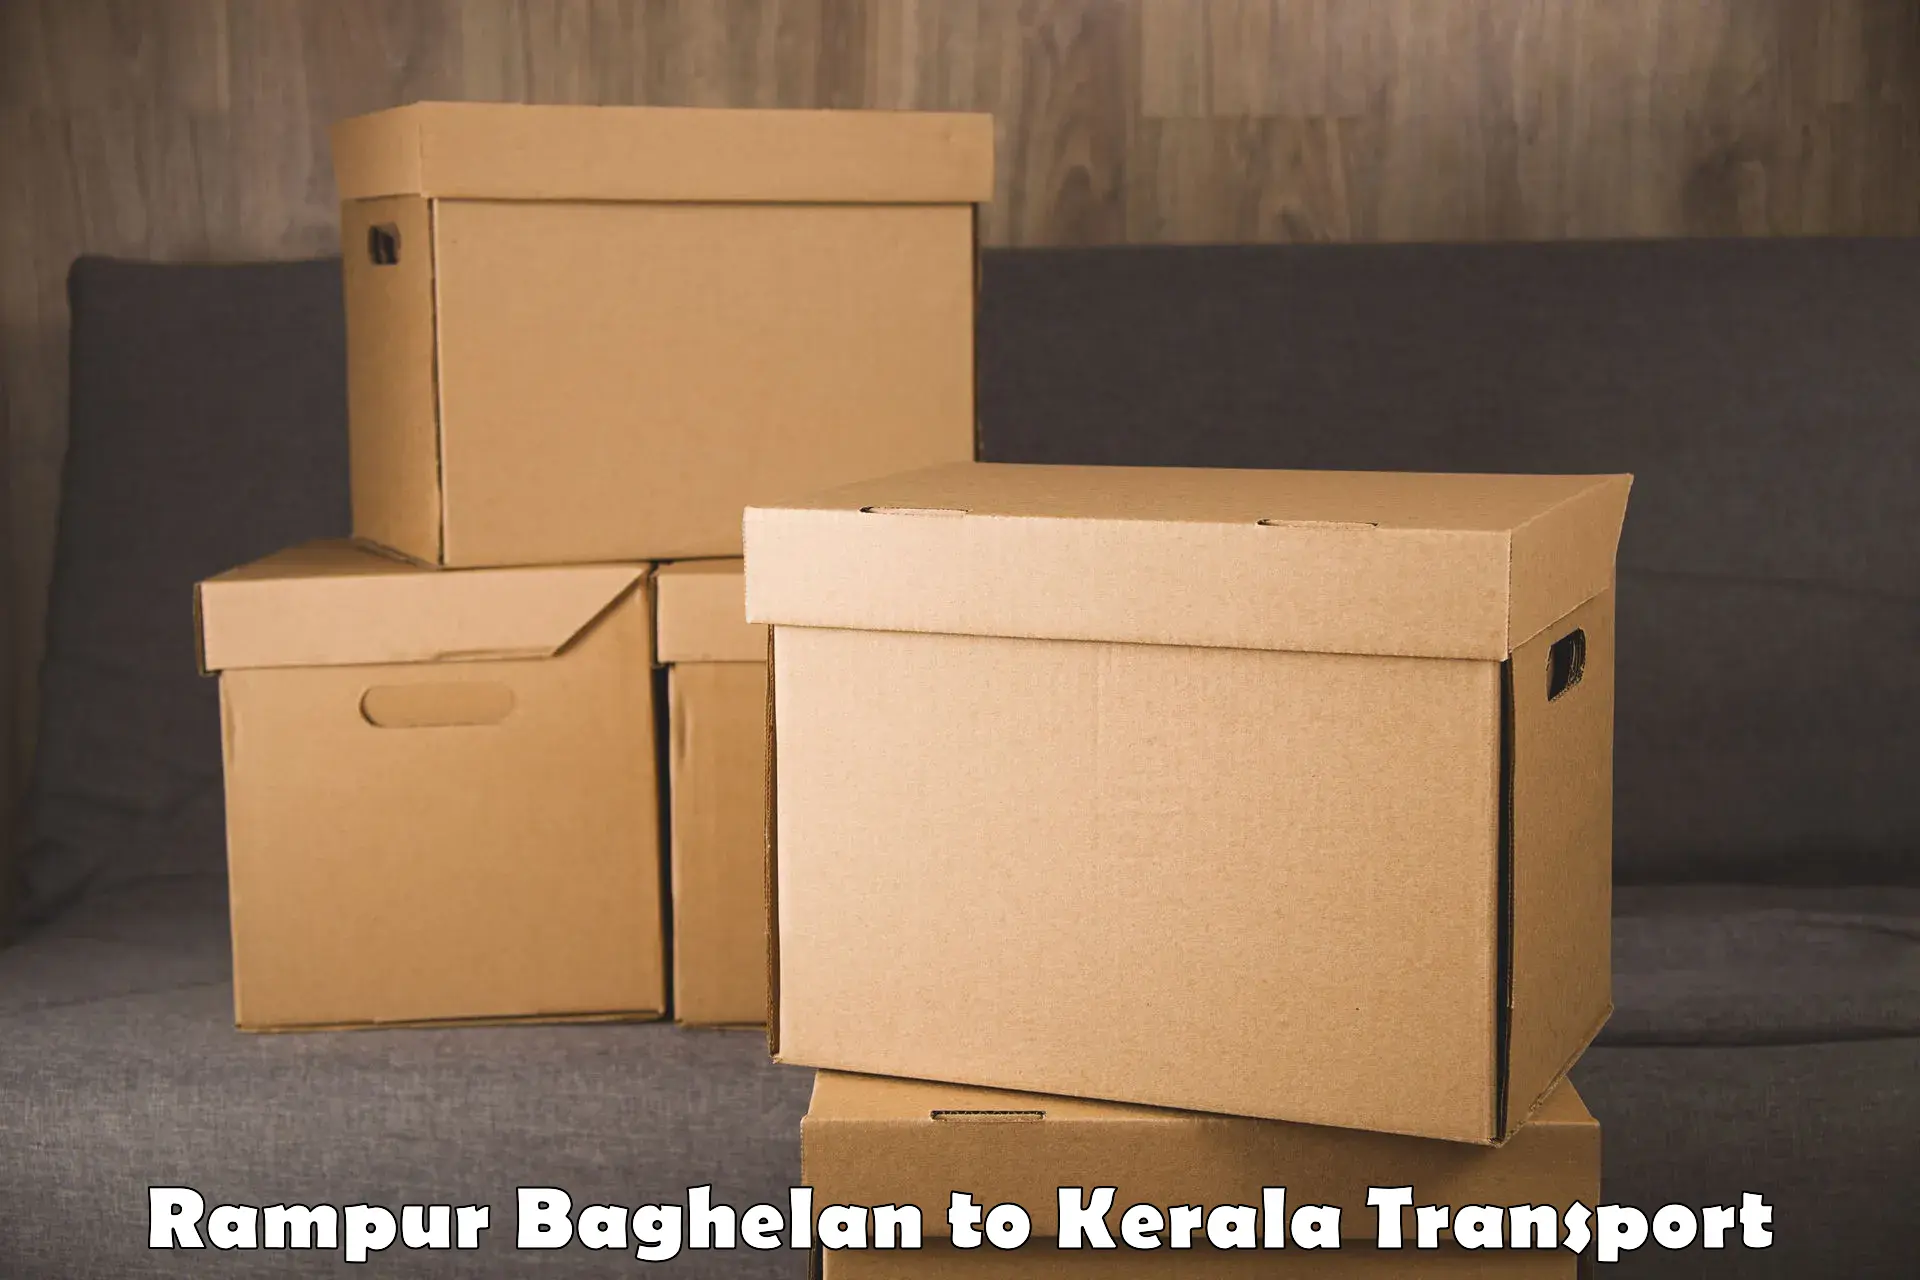 Parcel transport services in Rampur Baghelan to Trivandrum